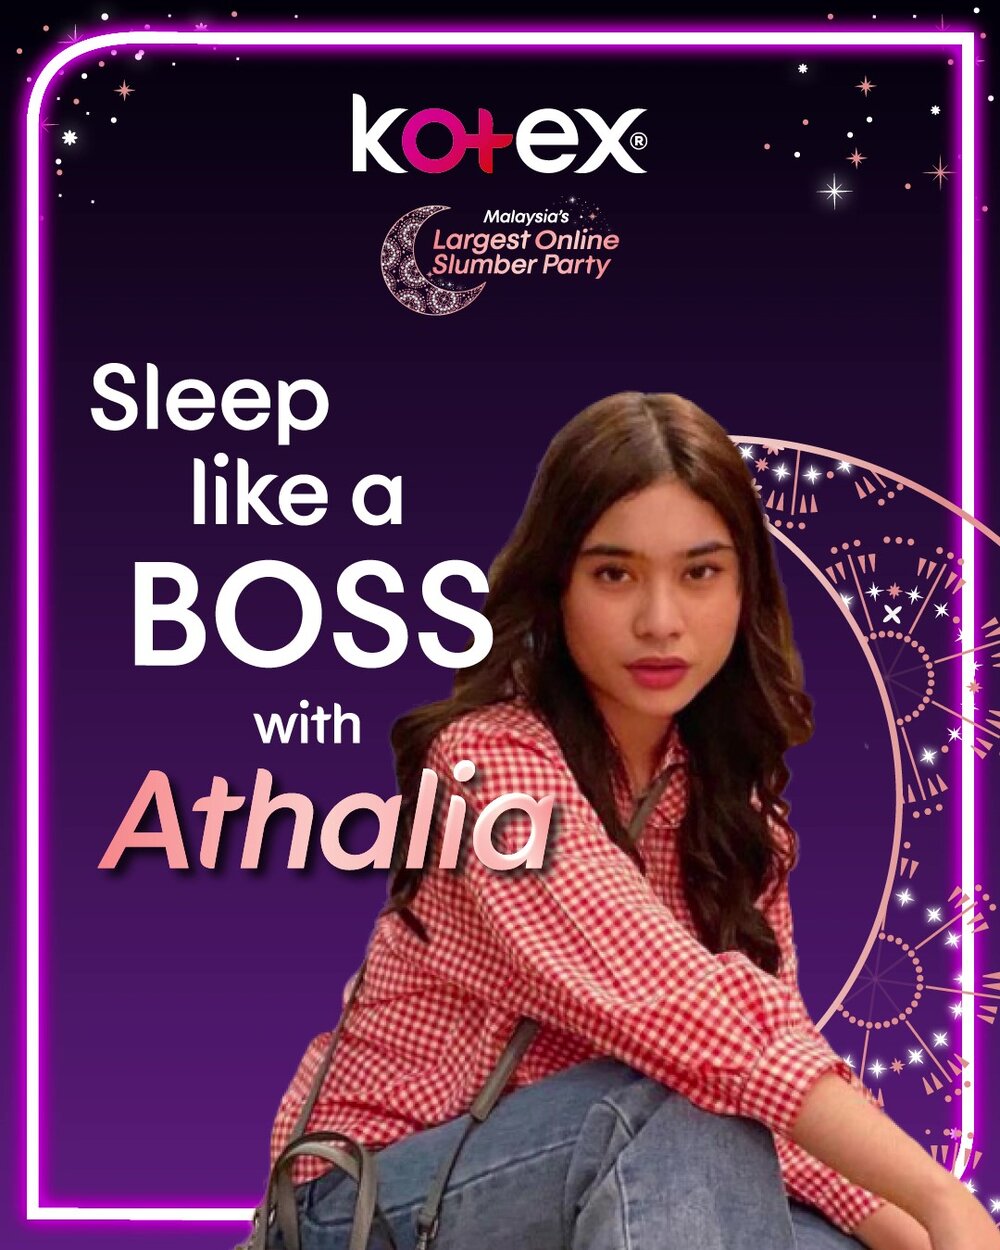 Kotex Slumber Party Poster - Sleep Like A Boss with Athalia.jpg